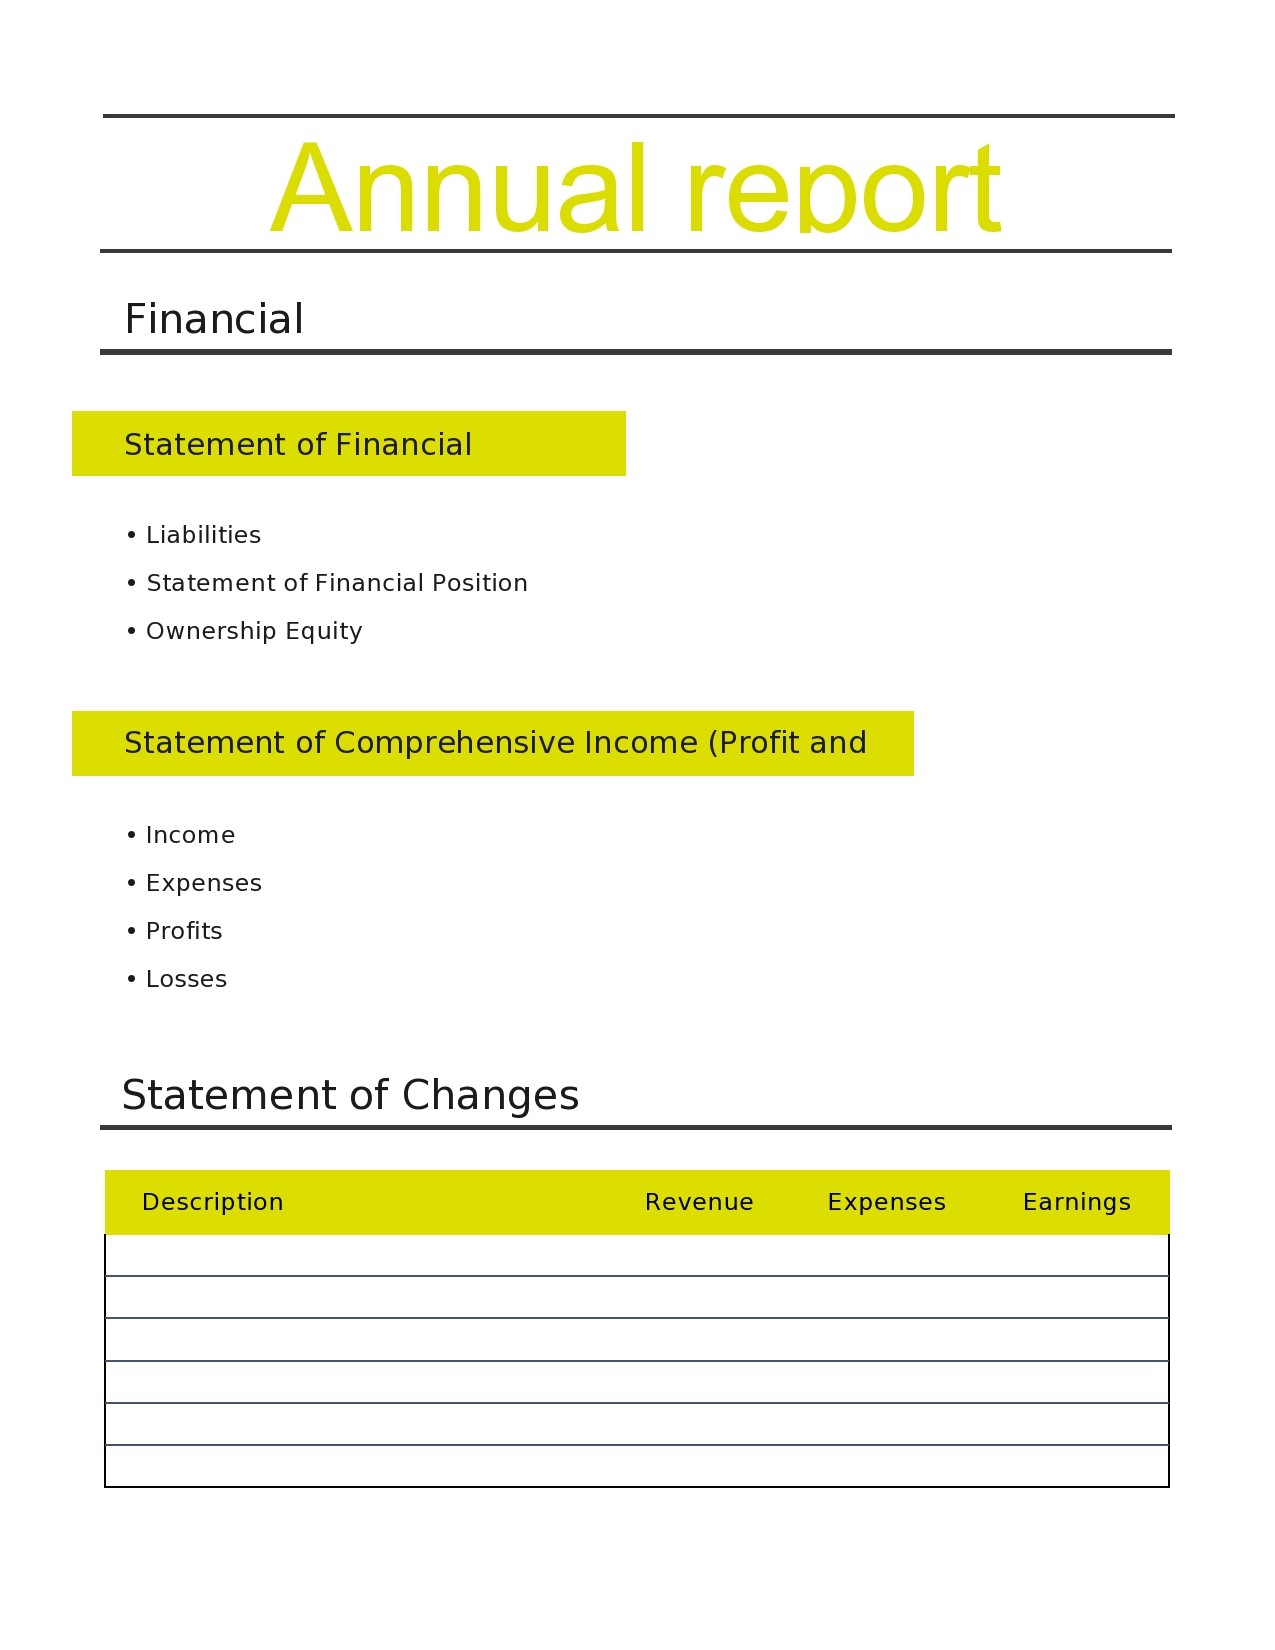 organization annual report